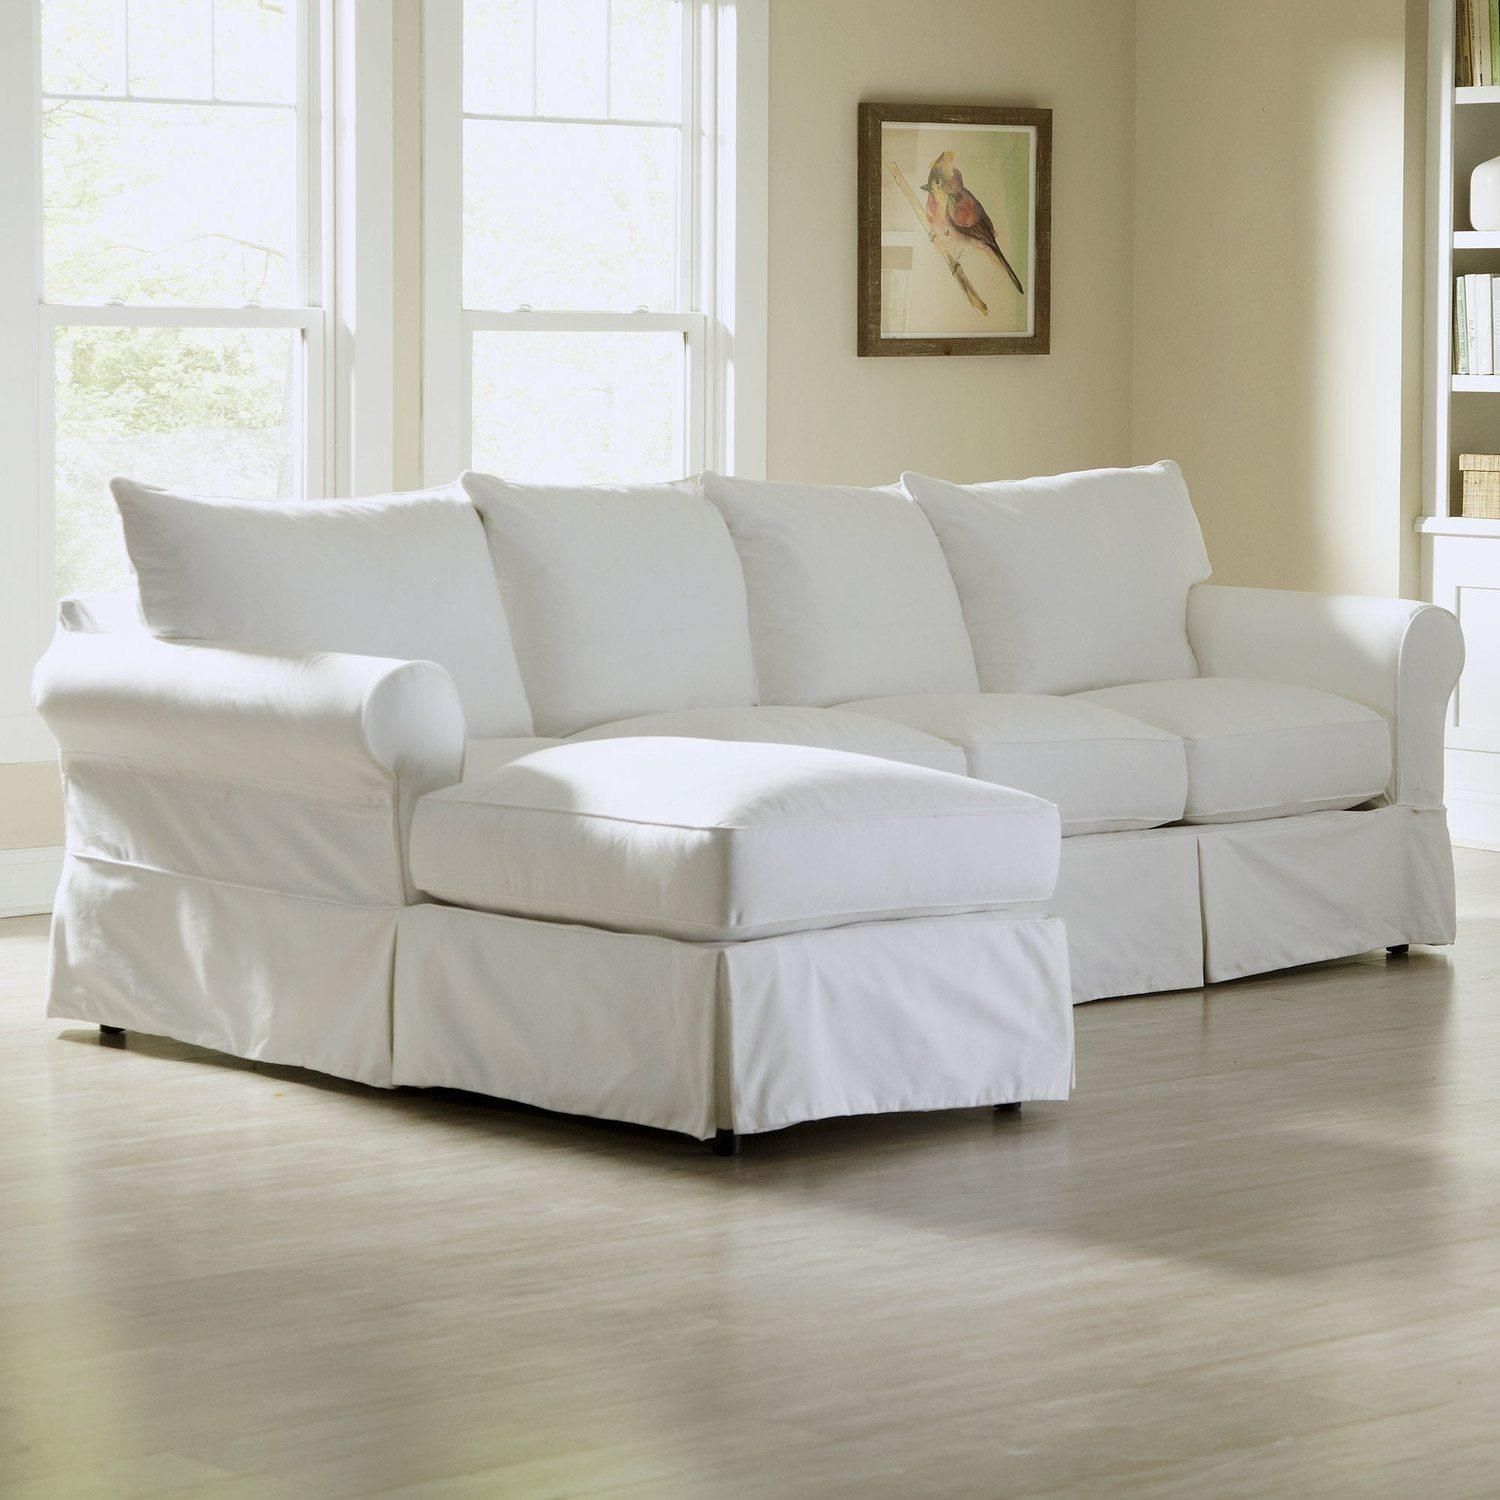 15+ Choices Of Down Sectional Sofa | Sofa Ideas Pertaining To Down Sectional Sofas (Photo 1 of 10)